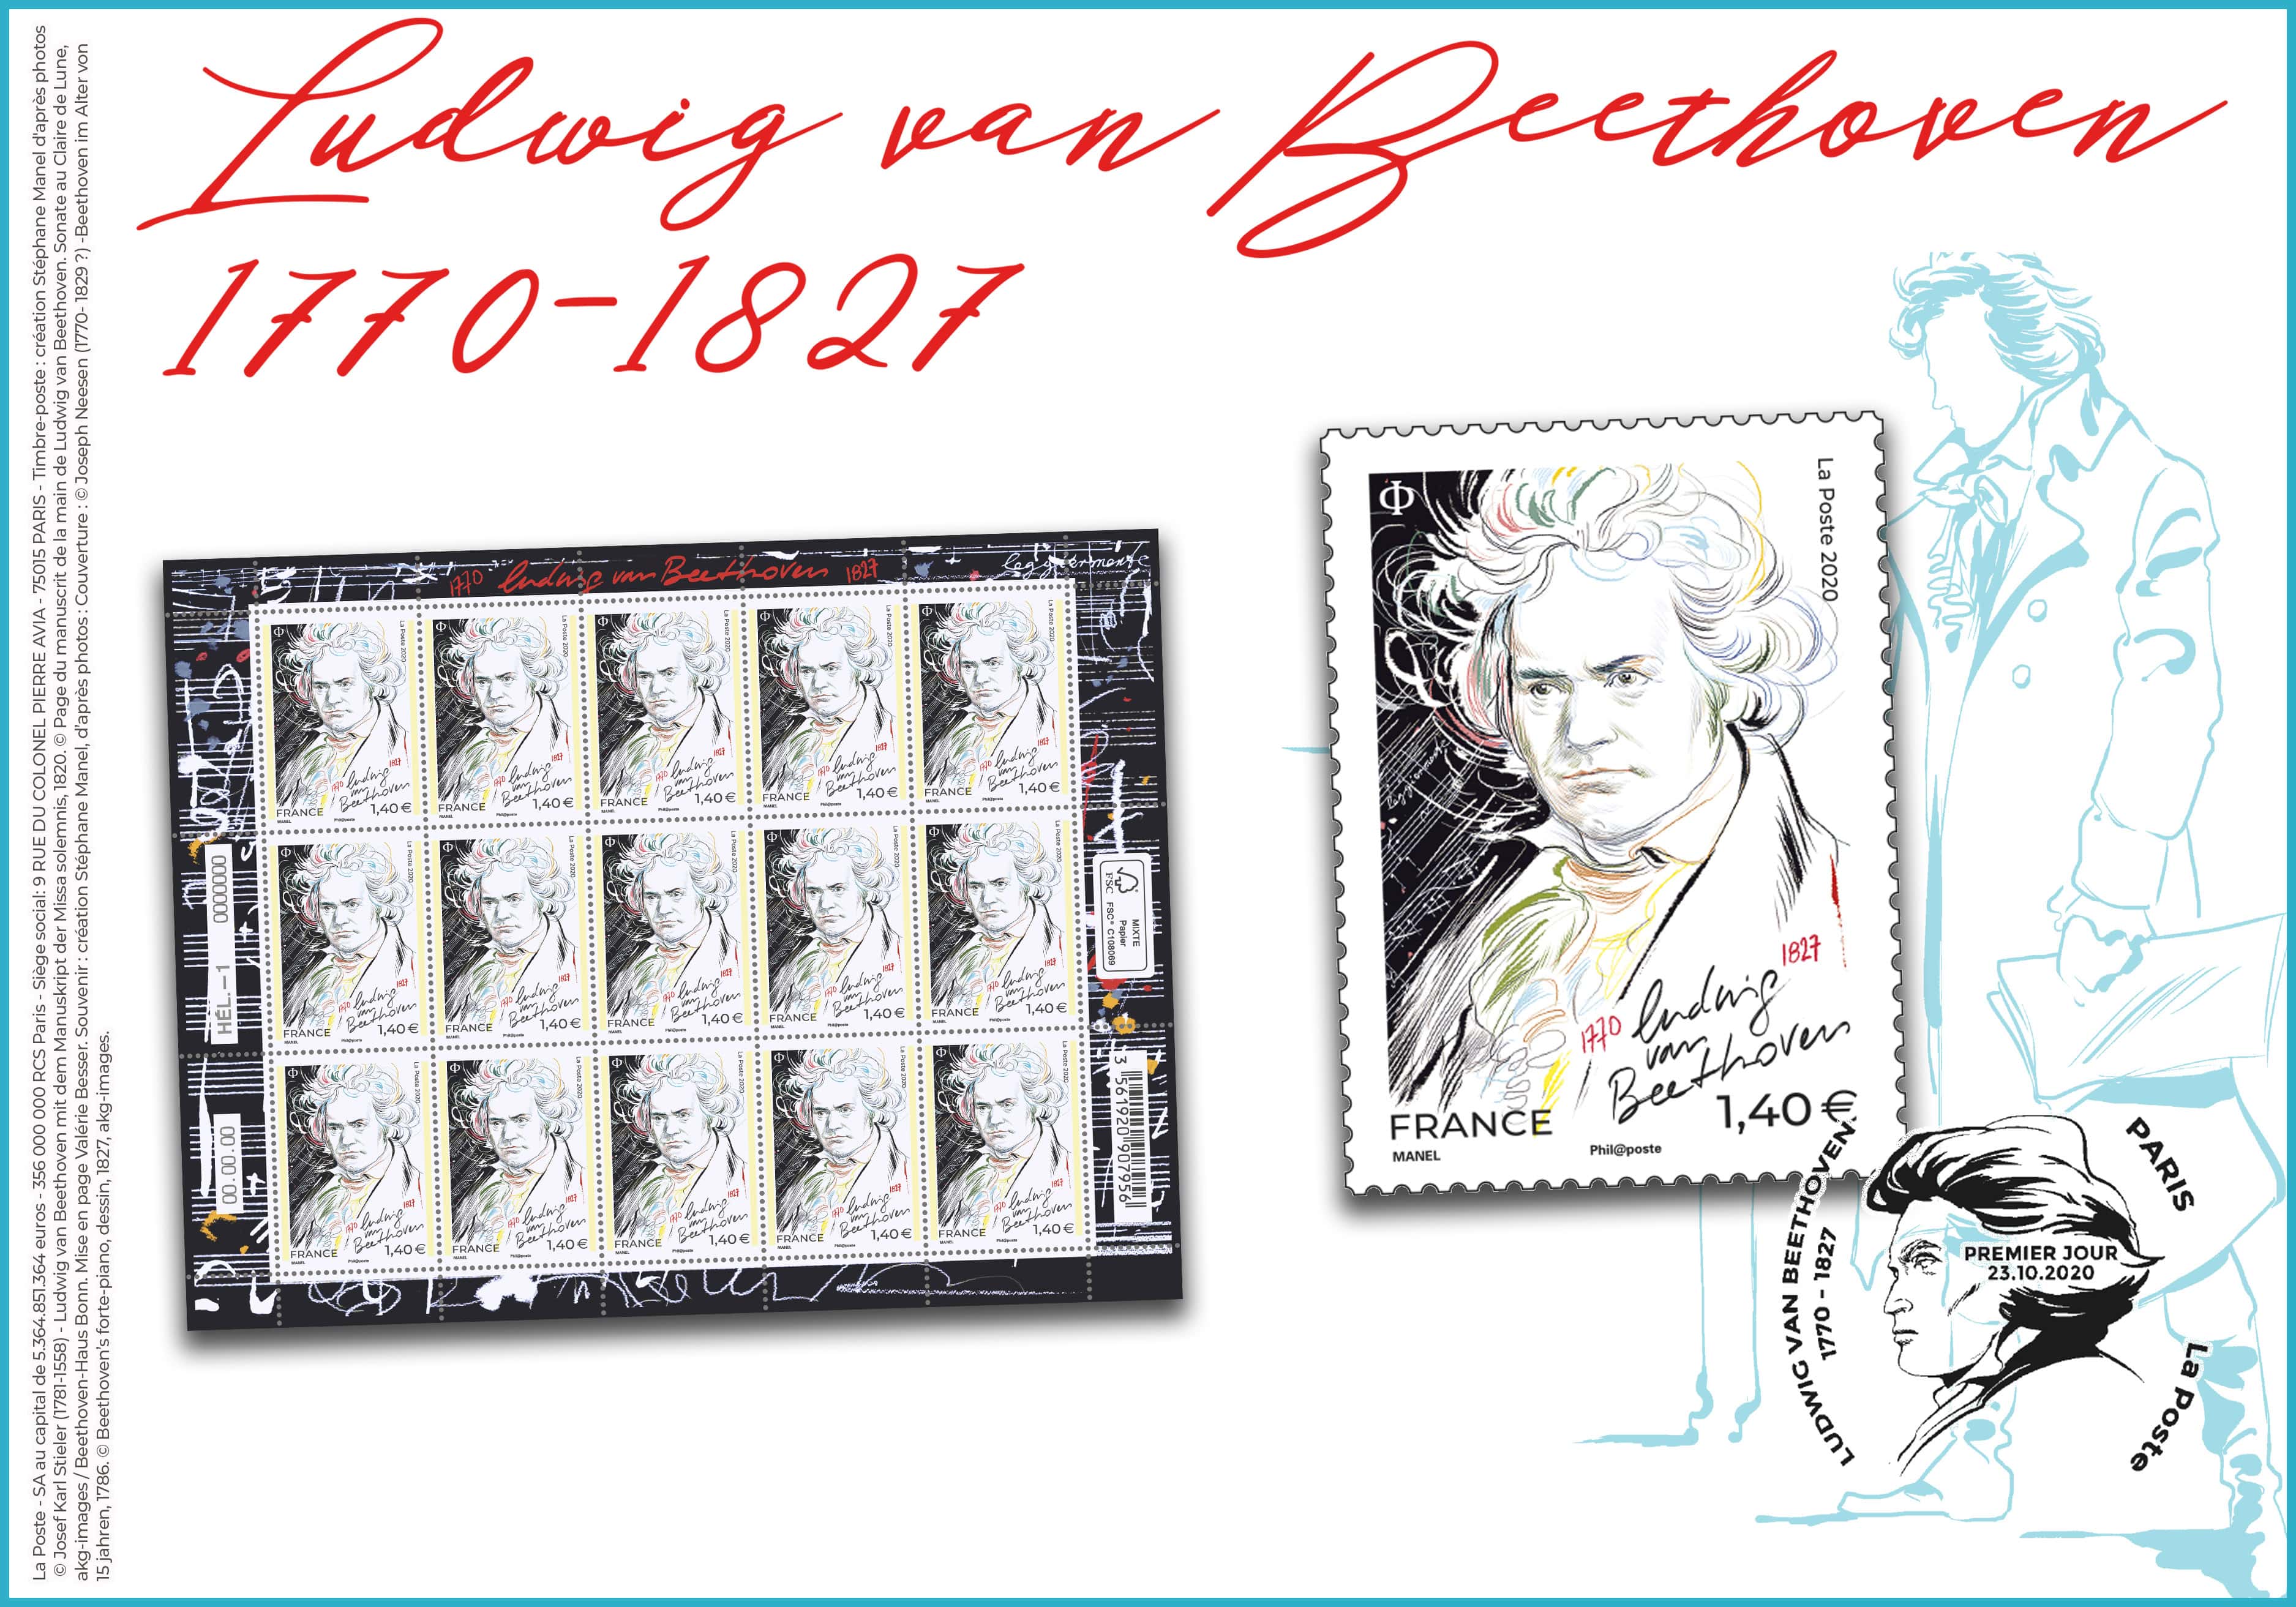 Timbre 'Ludwig Van Beethoven 1770-1827'.